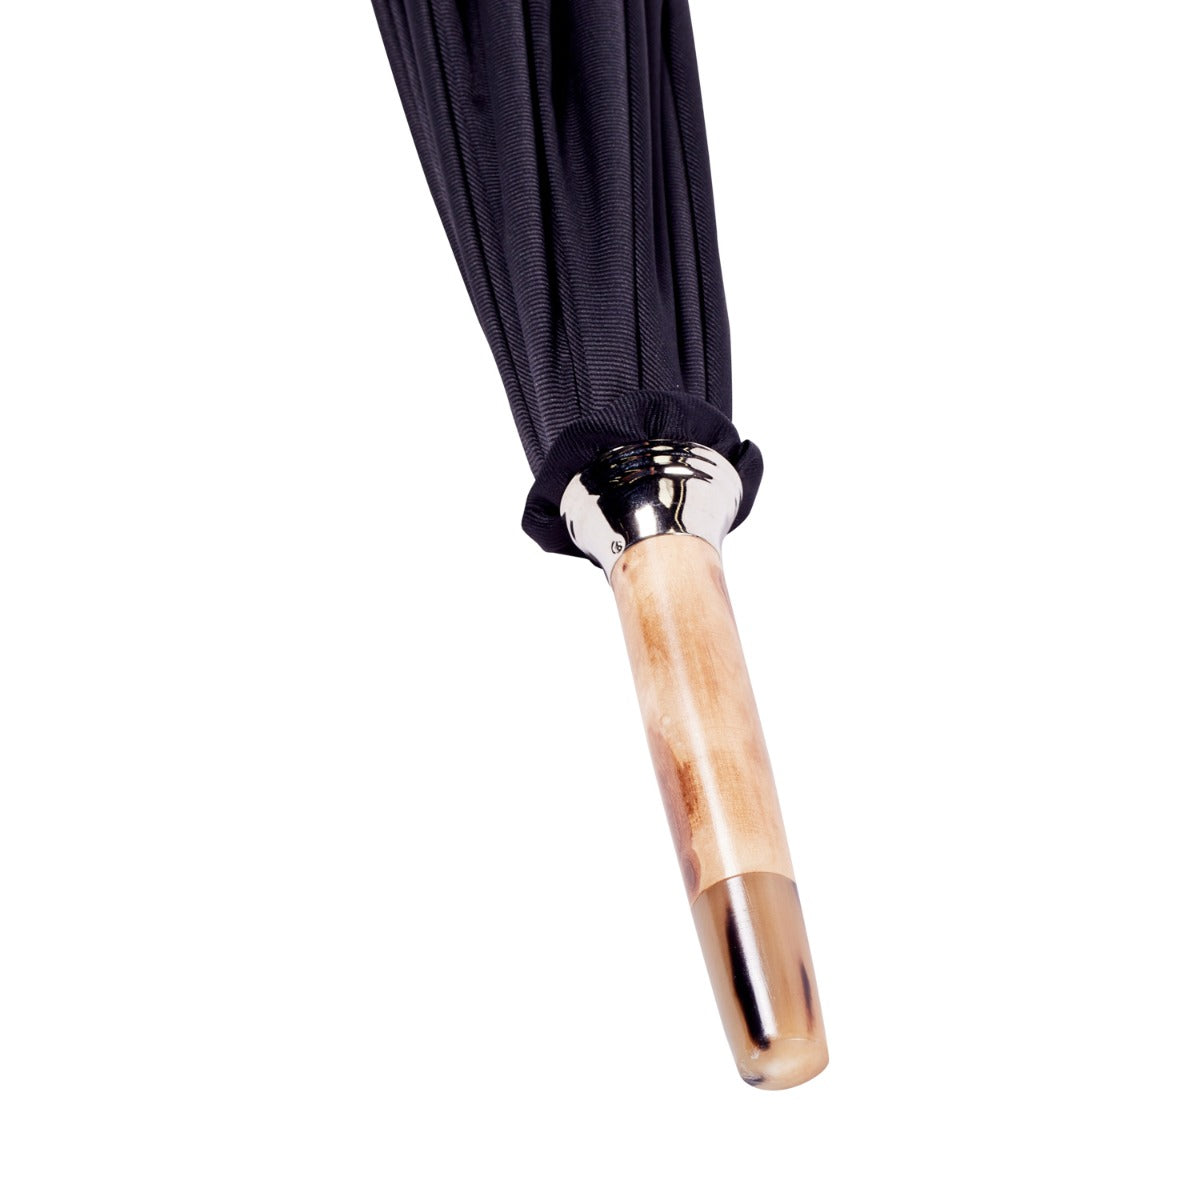 A Elm Wood Umbrella with Black Canopy from KirbyAllison.com.